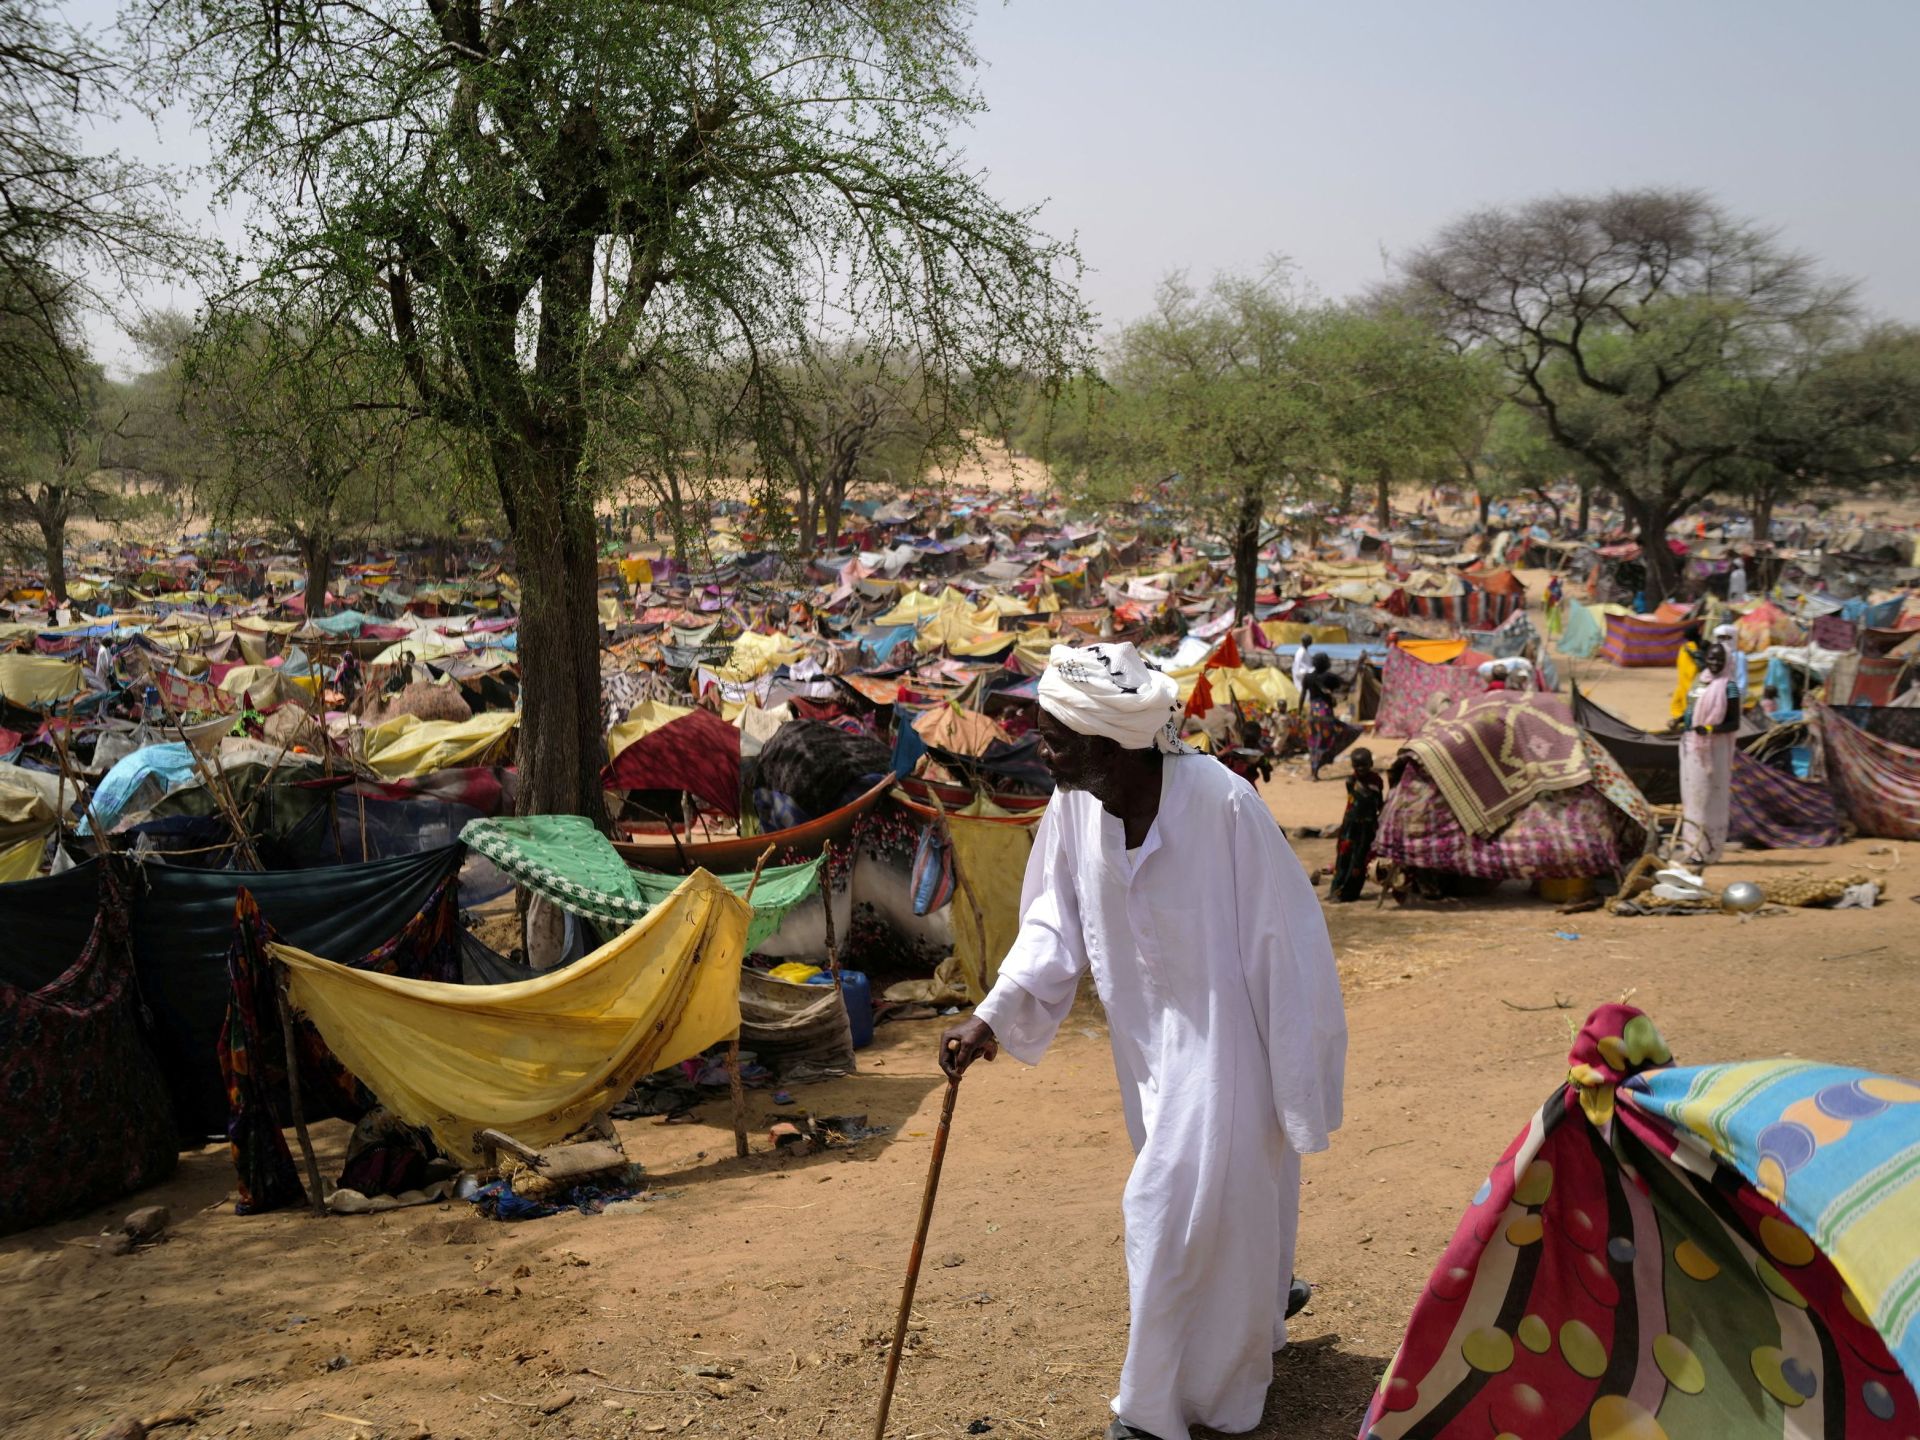 Sudan war could lead to more ethnic killings in volatile Darfur region